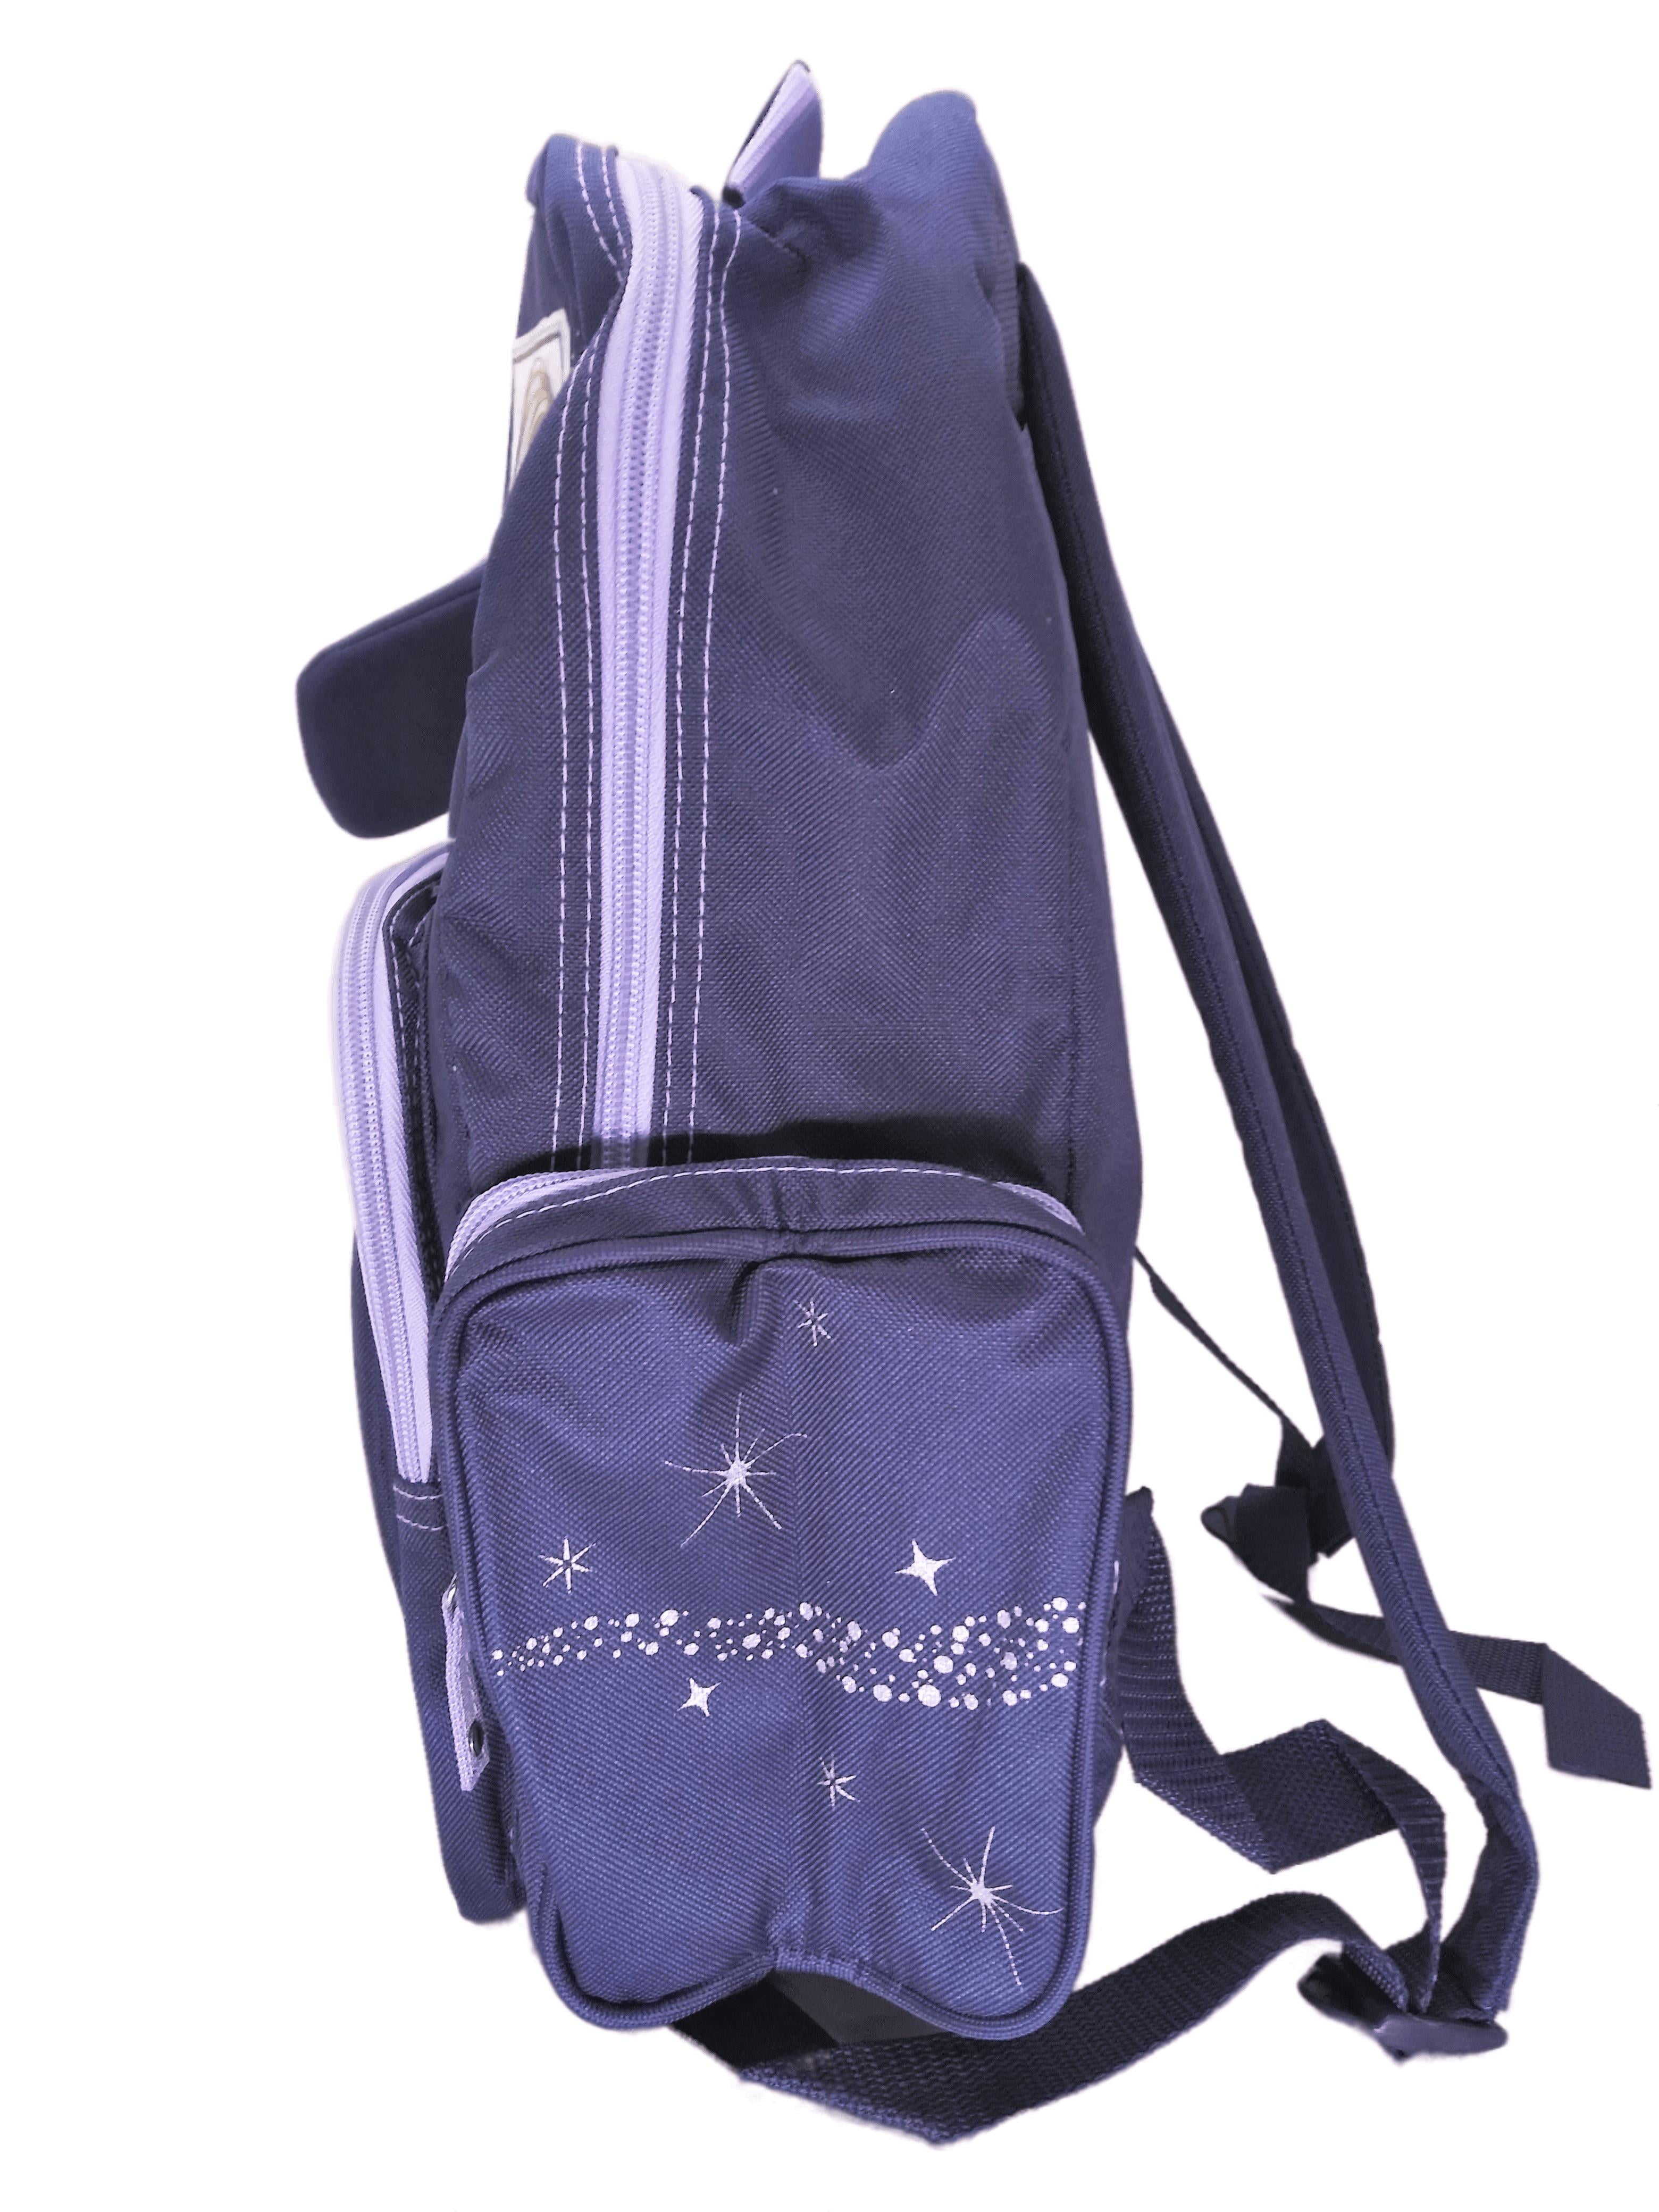 Original Bratz purple logo  Backpack for Sale by Redbubblofficia